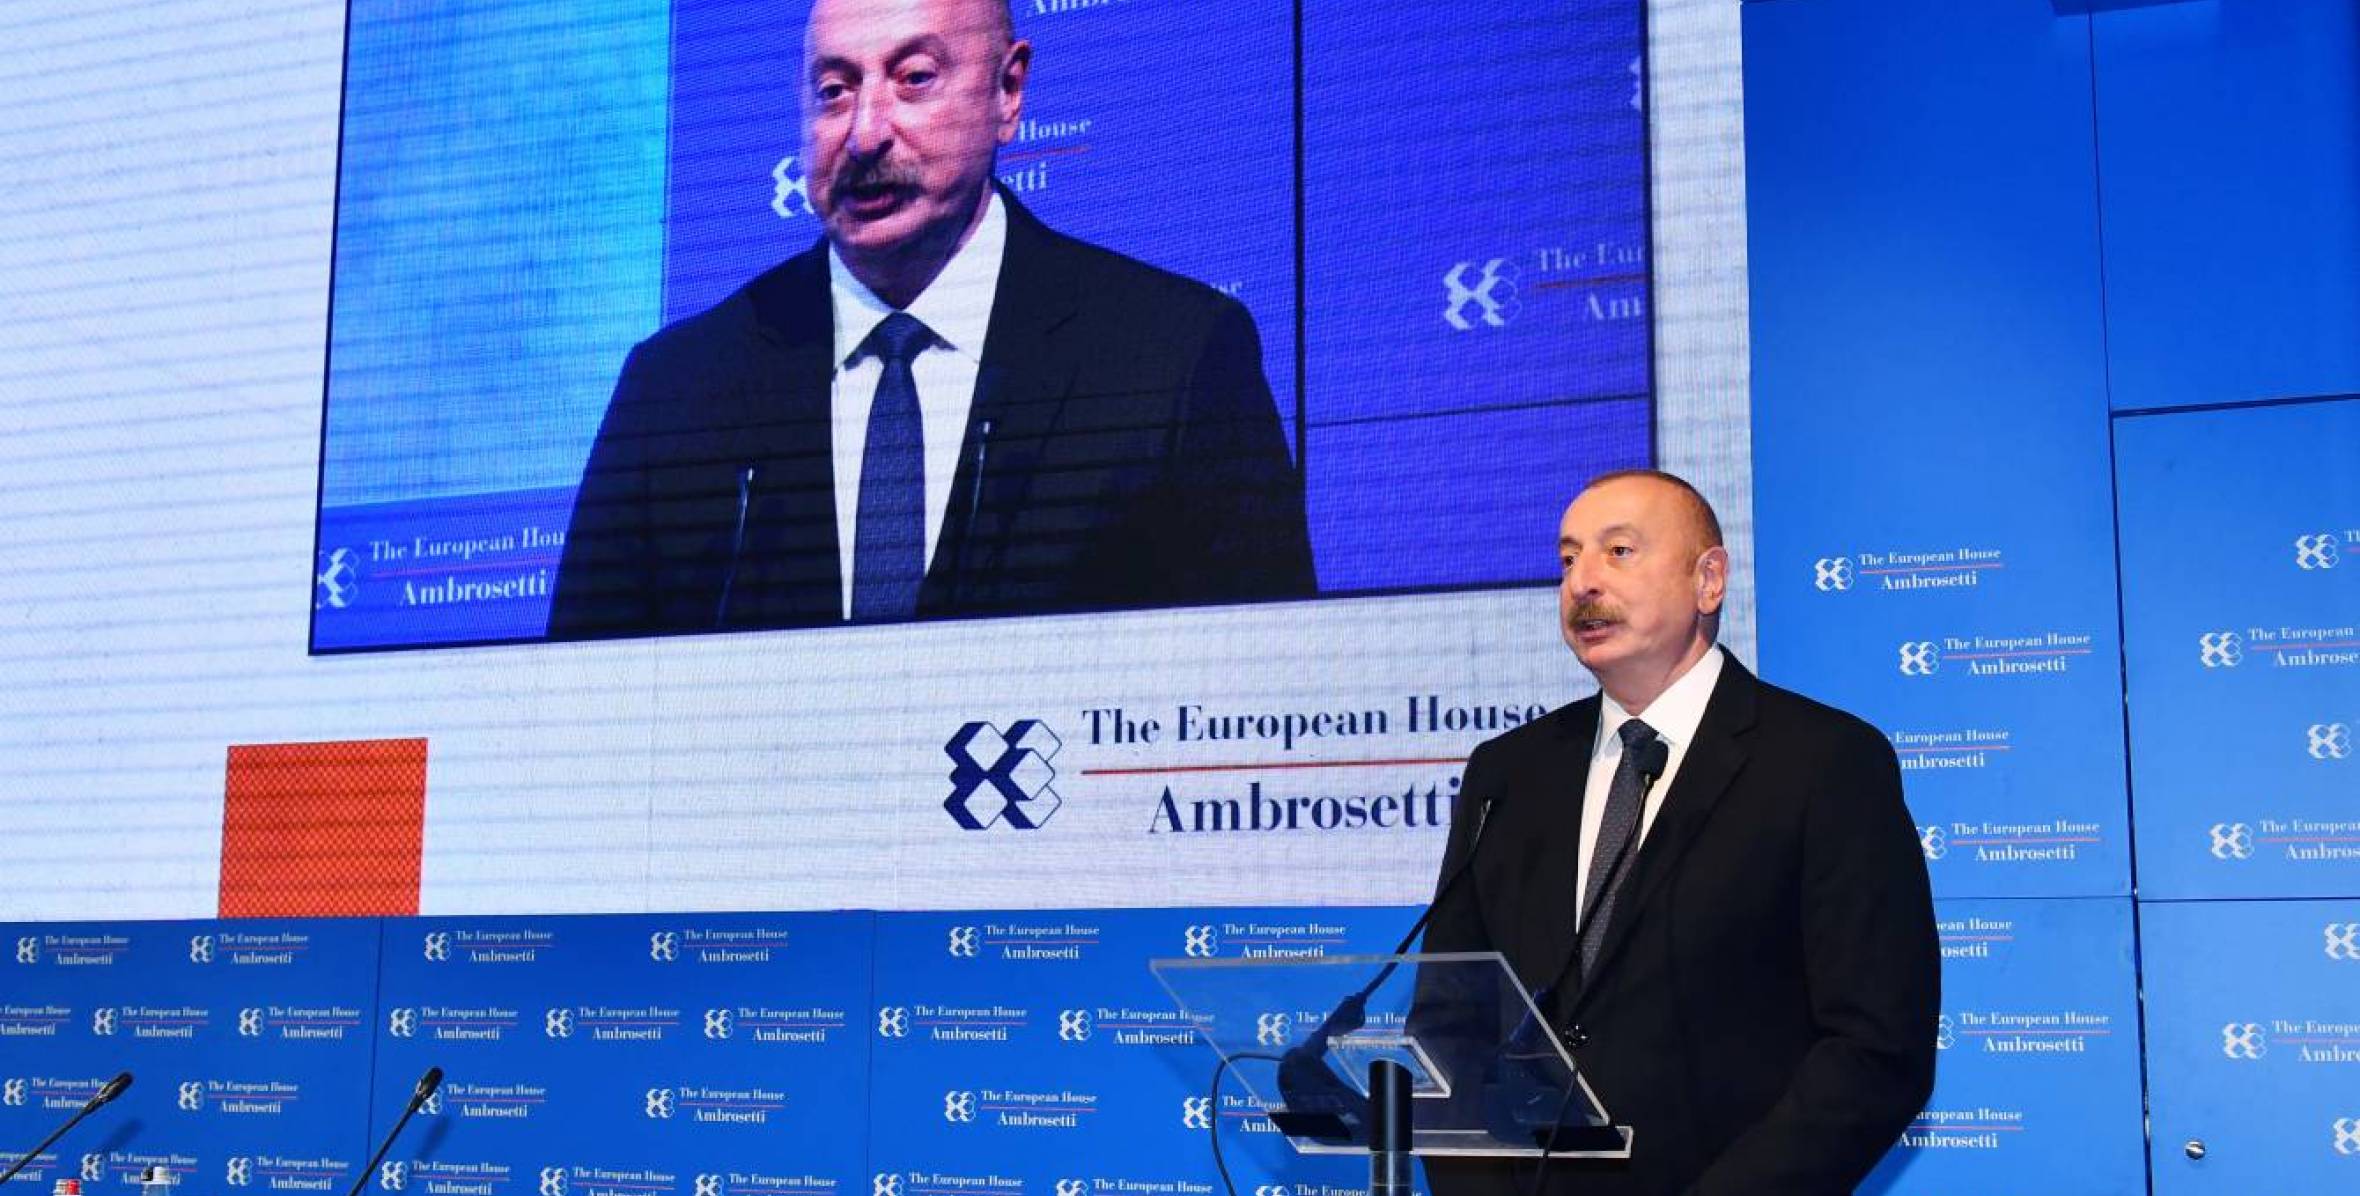 Working visit of Ilham Aliyev to Italy